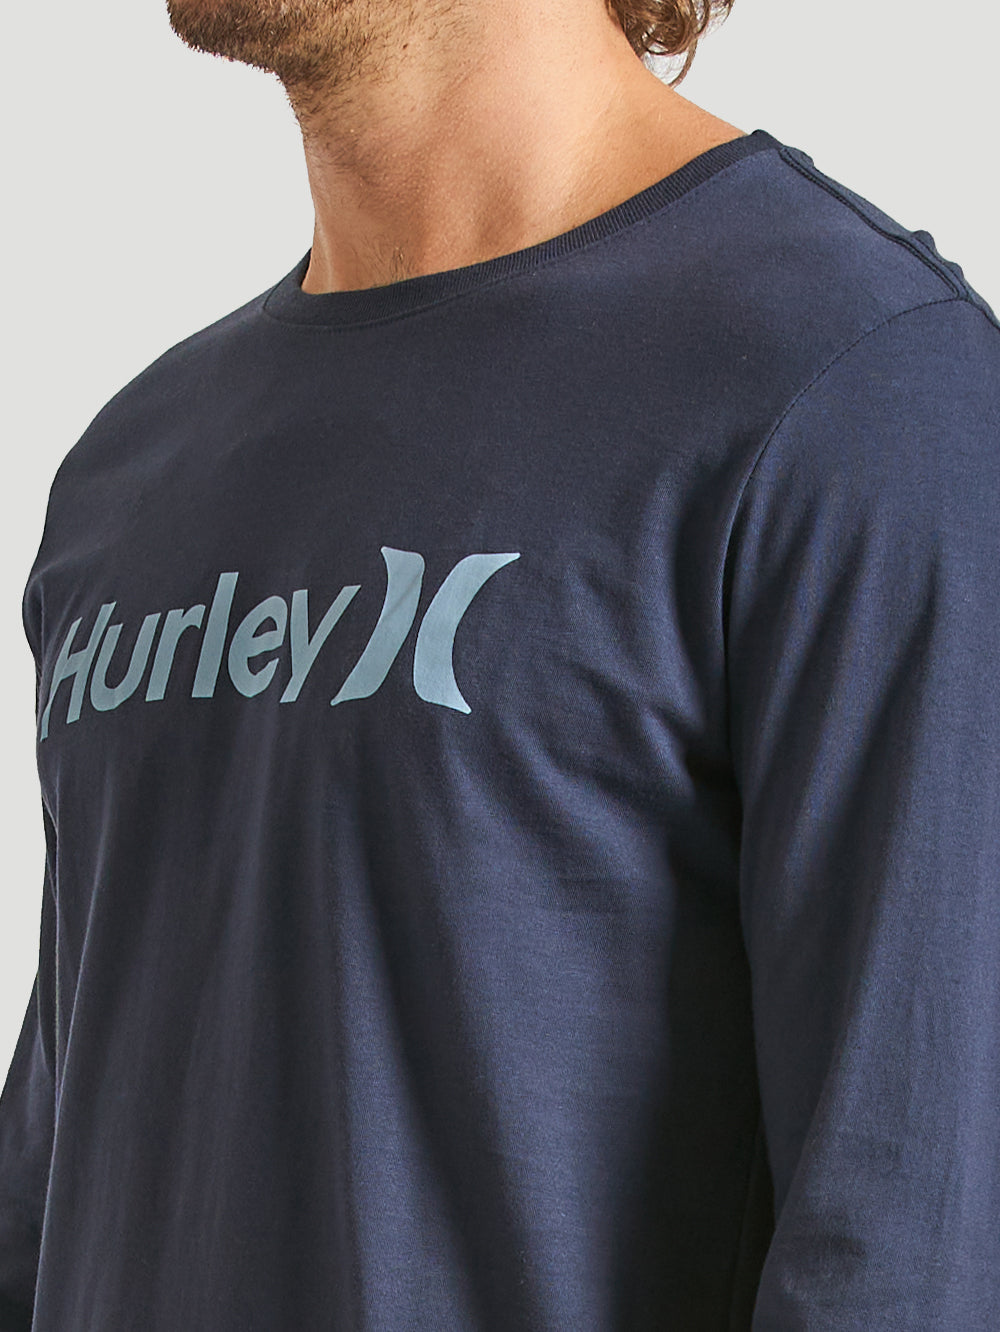 Camiseta Manga Longa Hurley O&O Solid Marinho